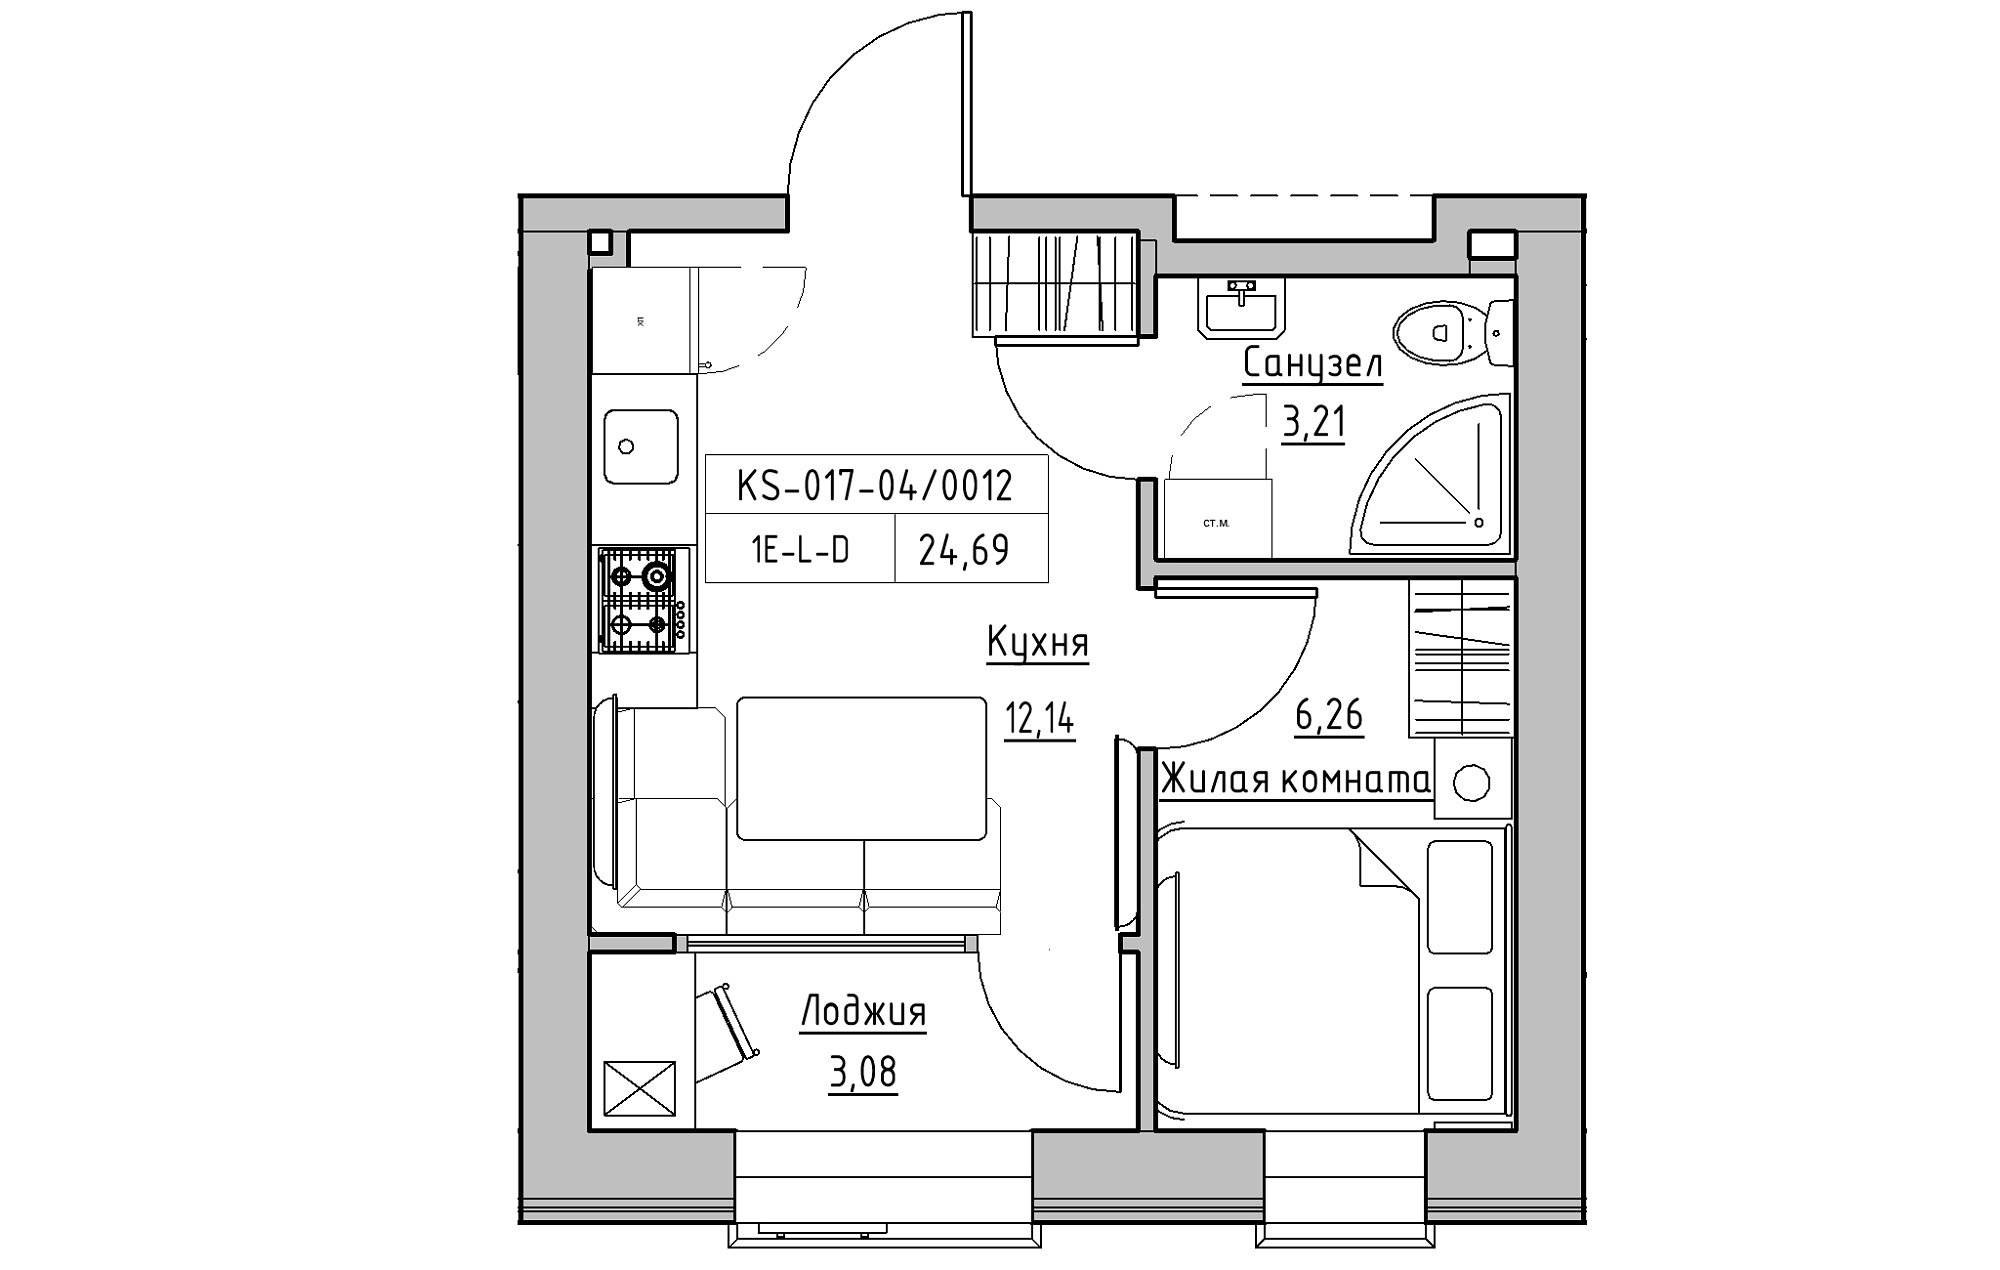 Planning 1-rm flats area 24.69m2, KS-017-04/0012.